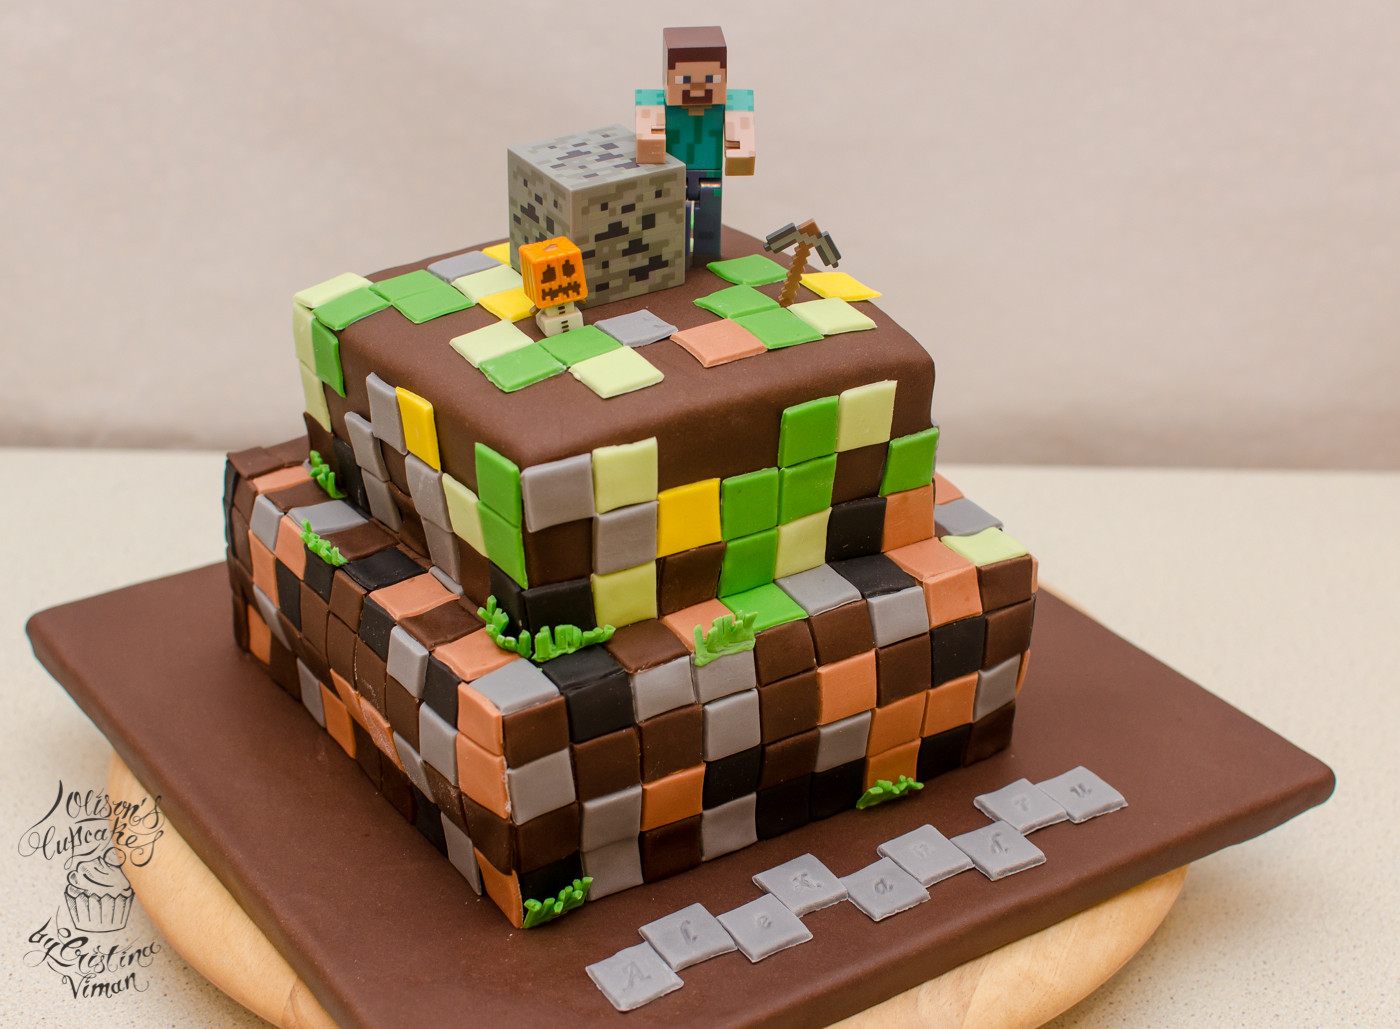 How To Make A Minecraft Birthday Cake
 Minecraft Birthday Cake – Olison s Cupcakes